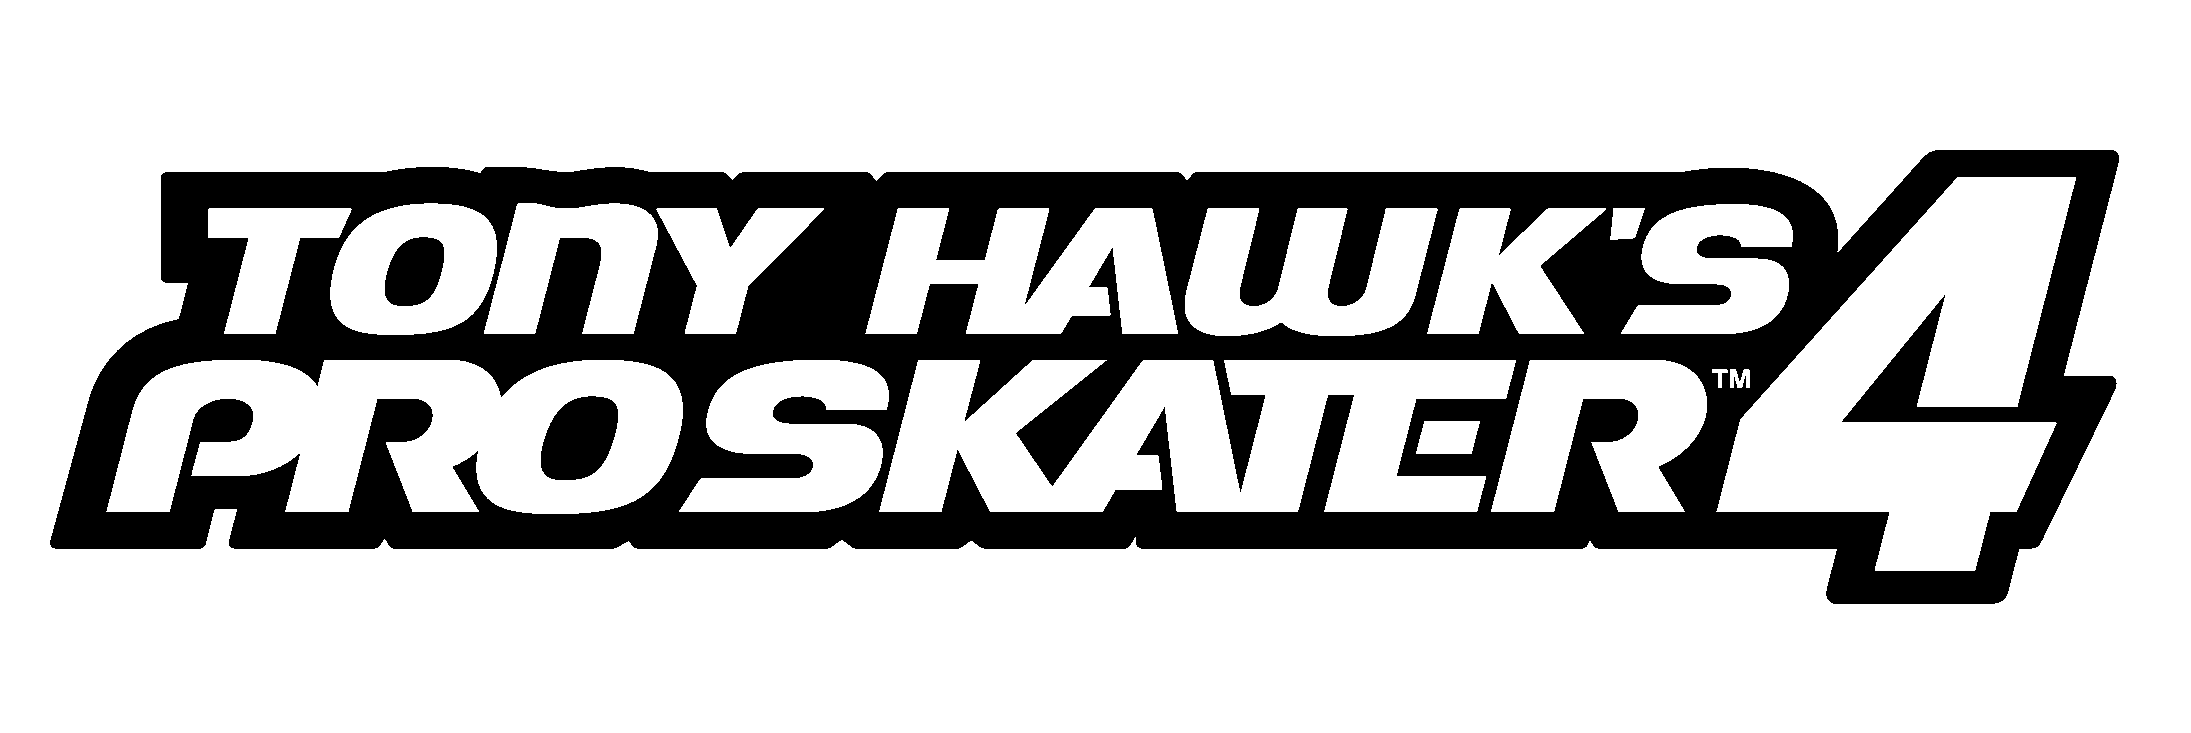 Tony Hawk’s Pro Skater 4 Logo PNG Photos